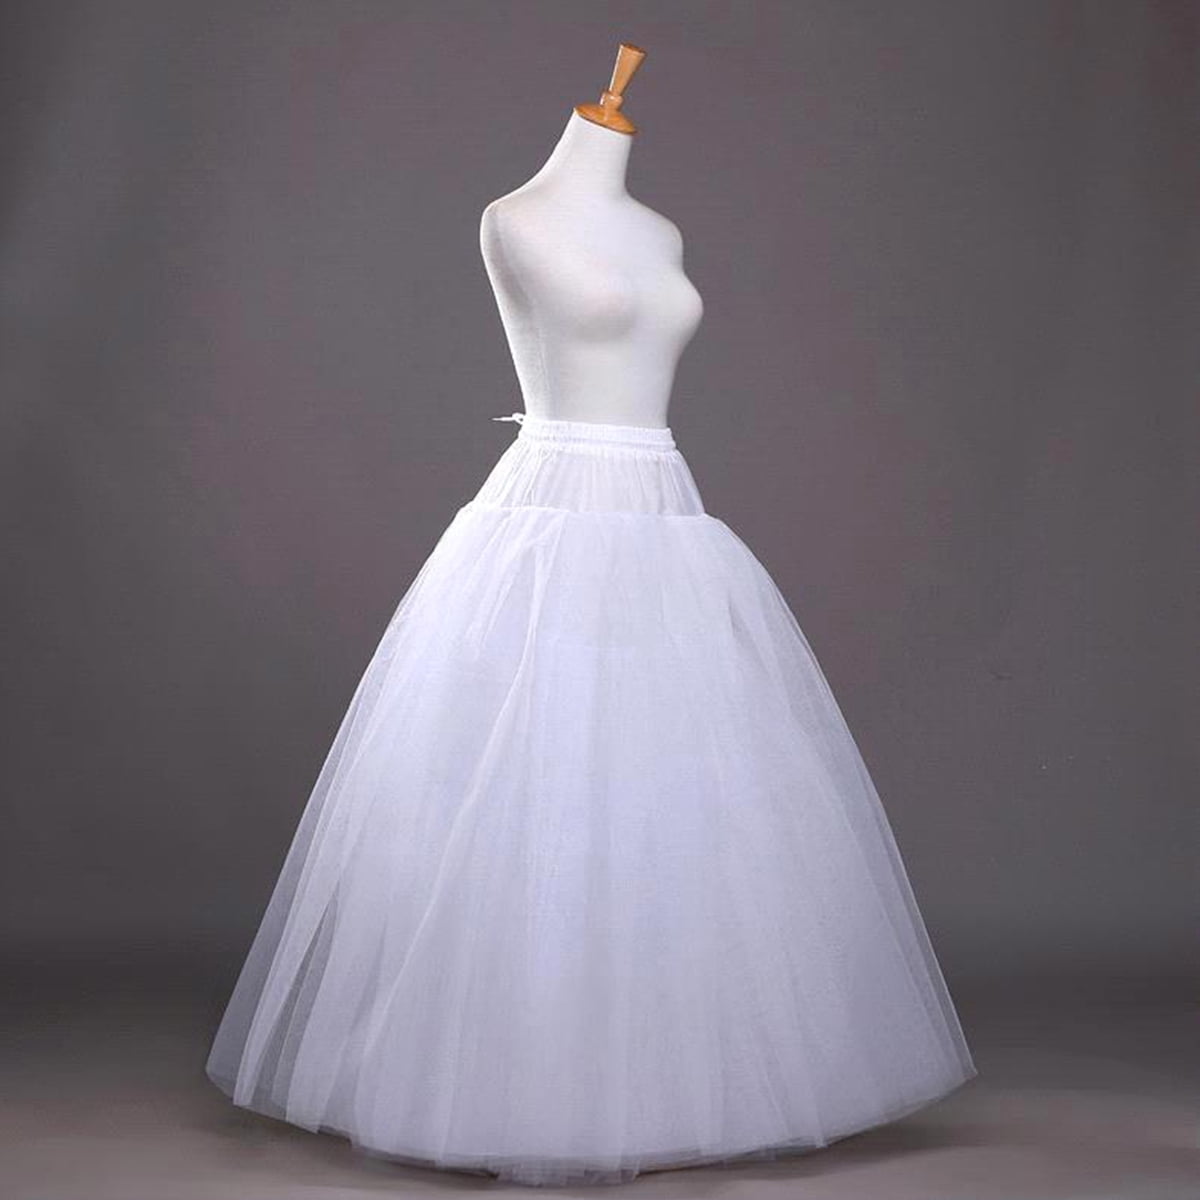 White Multi Style Petticoats Mermaid Trump A Line Ball Gown Crinoline Underskirt 